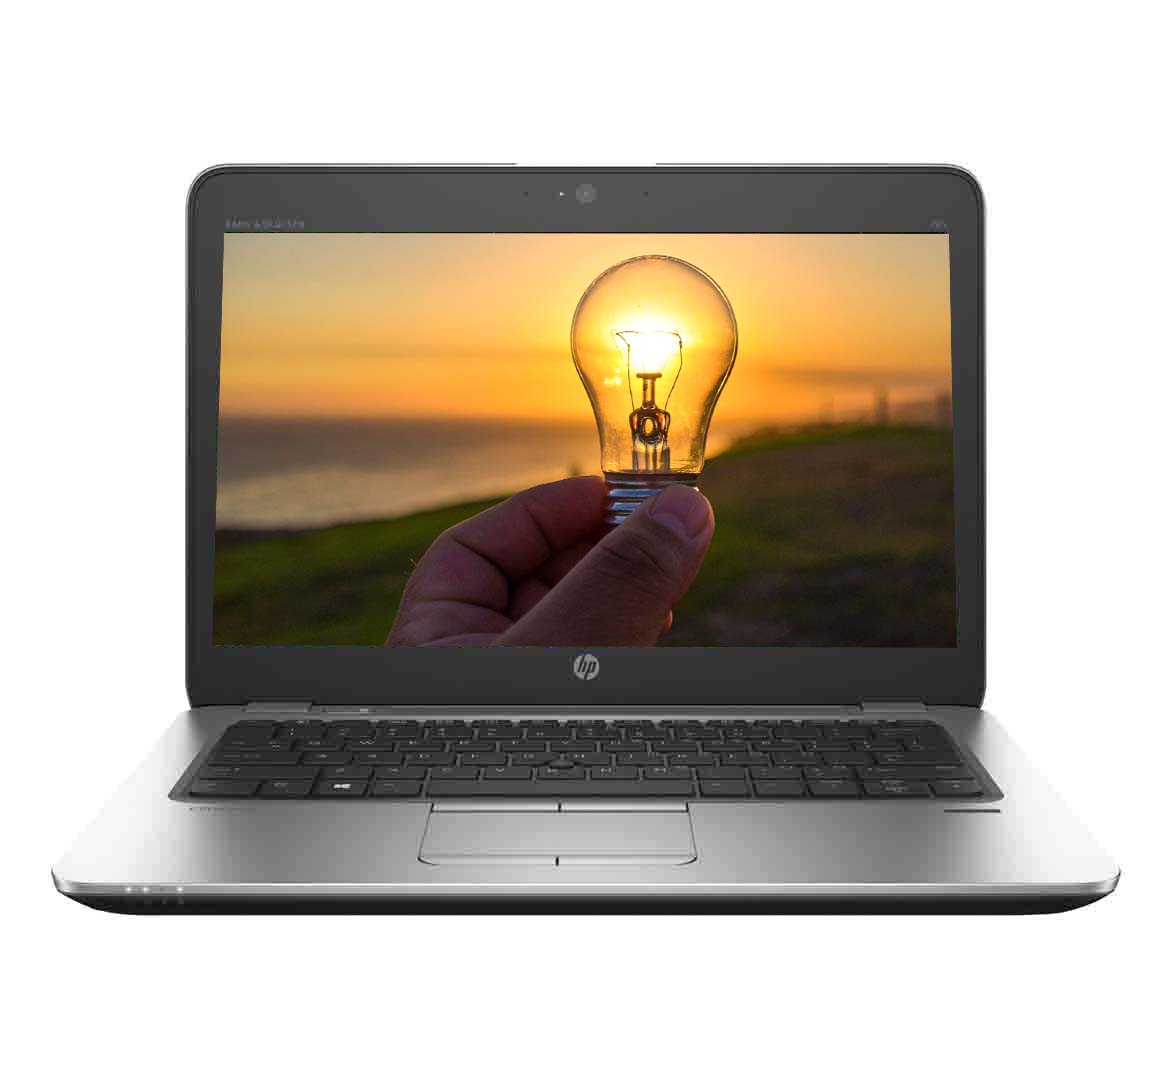 HP EliteBook 725 G3, AMD A10 Series CPU, 8GB RAM, 256GB SSD, 12.5 inch Touchscreen, Win 10 Pro, Refurbished Laptop